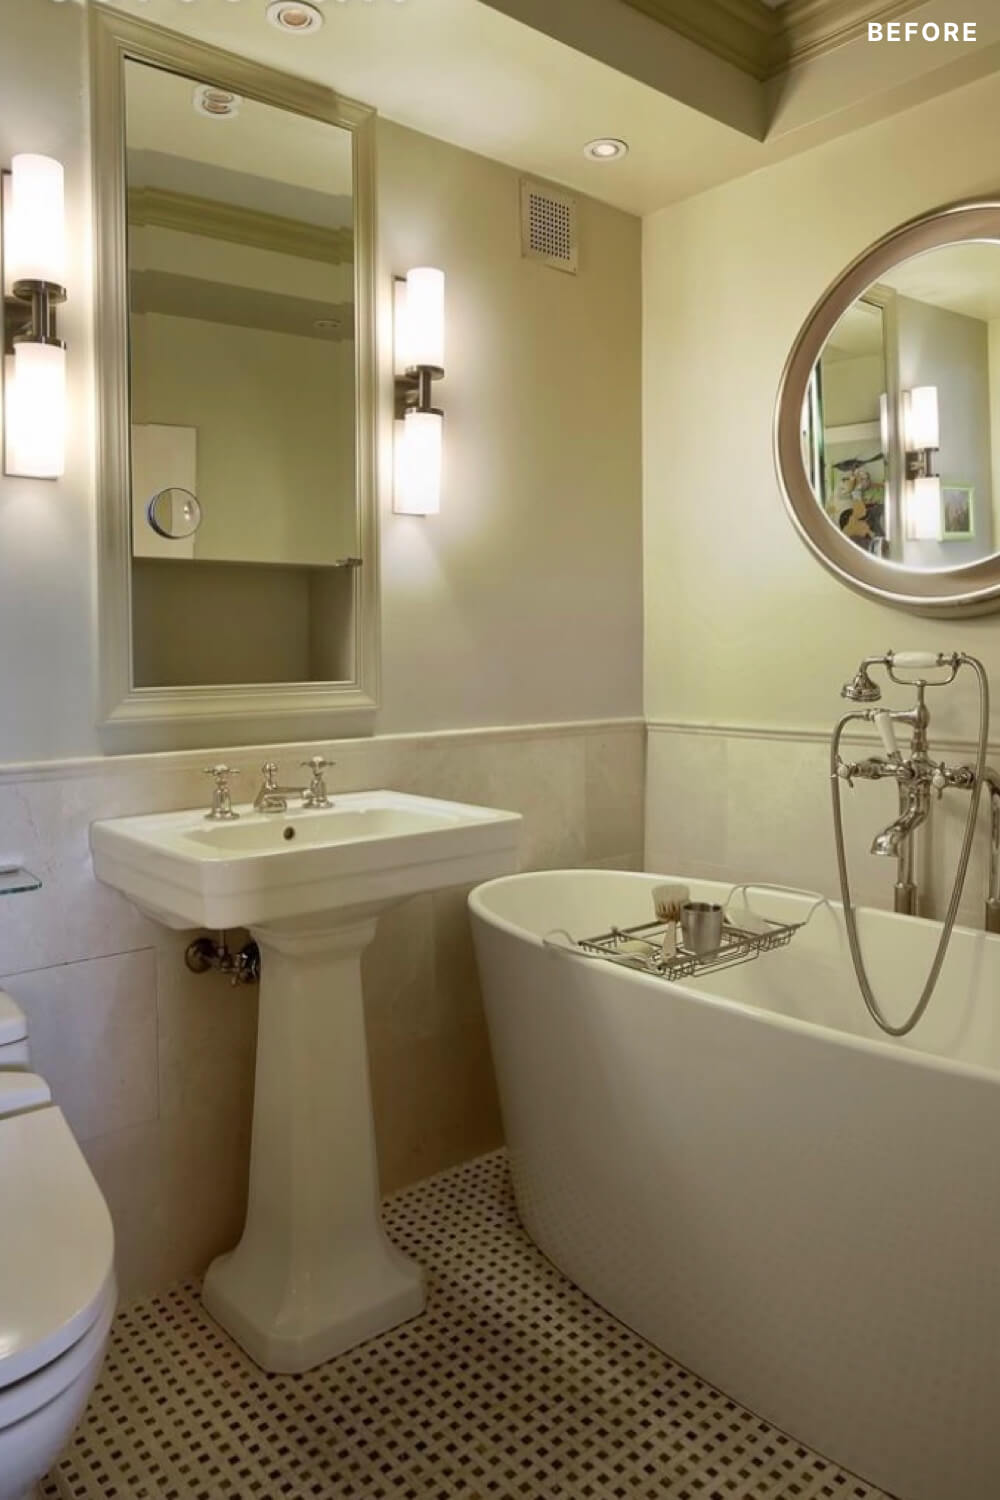 7 Bathtub To Shower Conversions That, Small Bathroom Ideas With Bathtub And Shower